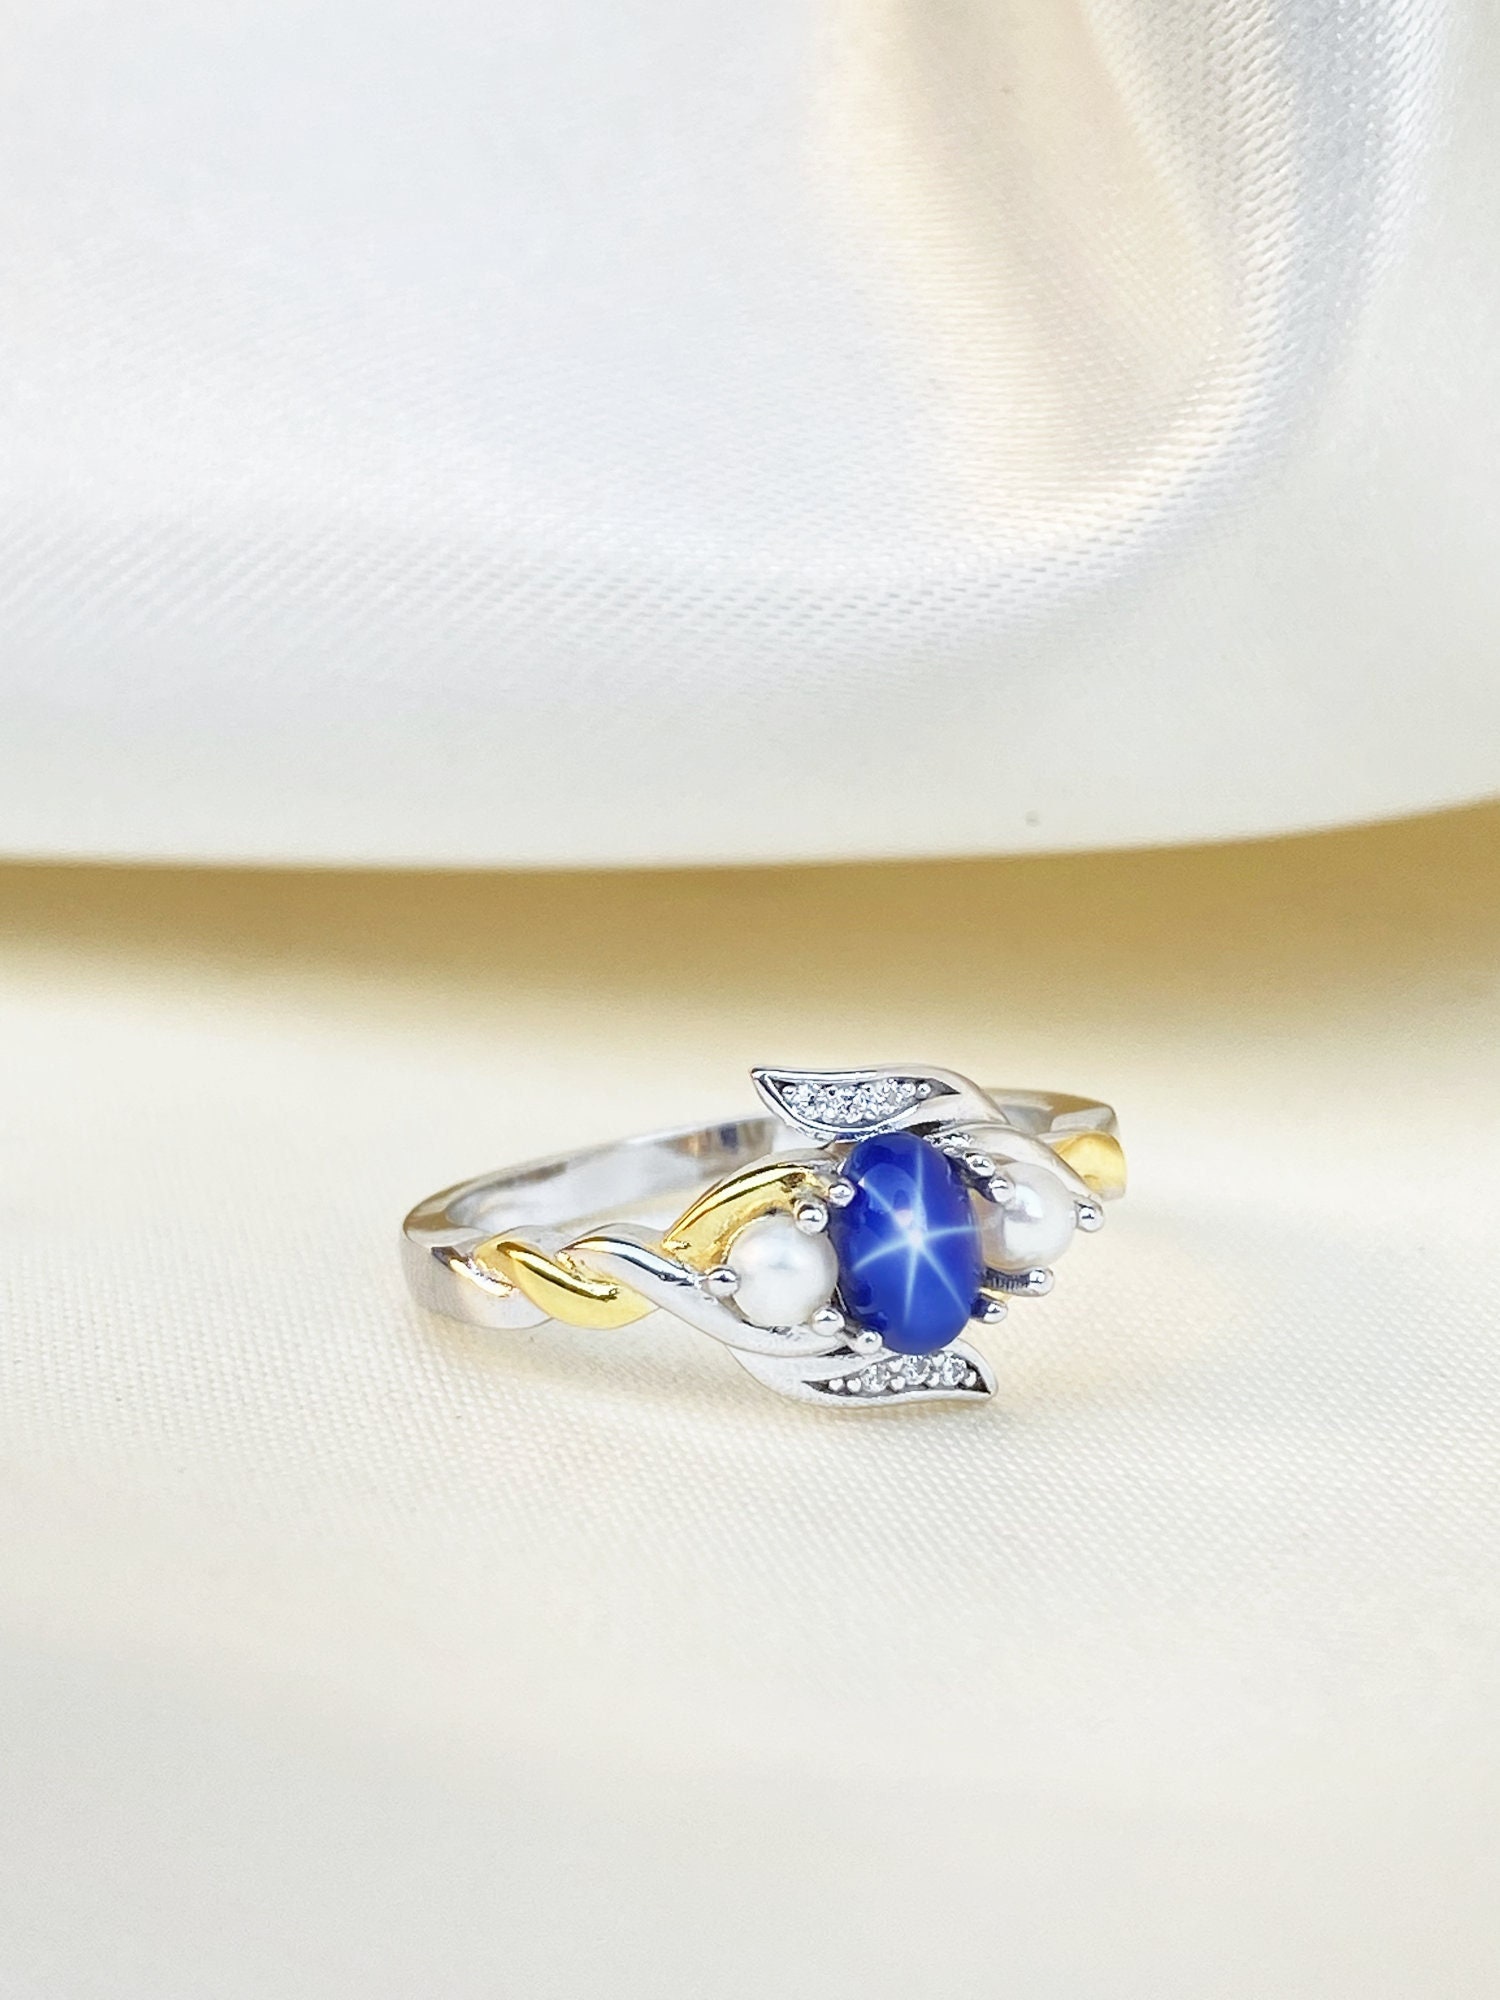 ACOTAR Feyre Wedding Ring Star Sapphire Stone Night Court - Etsy